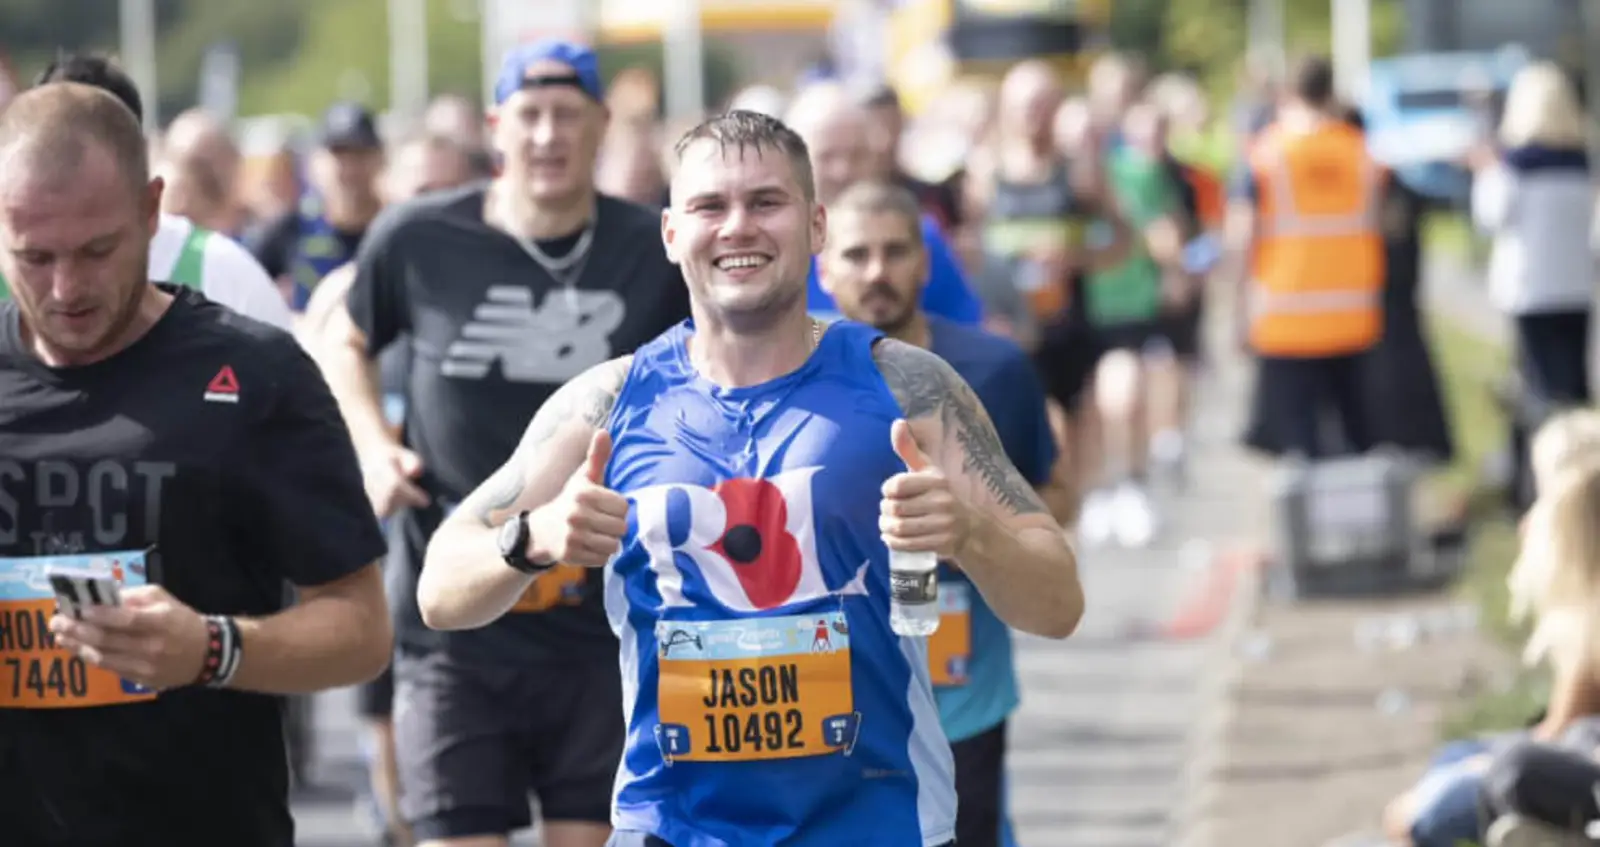 Poppy Run participant - London Landmarks Half Marathon